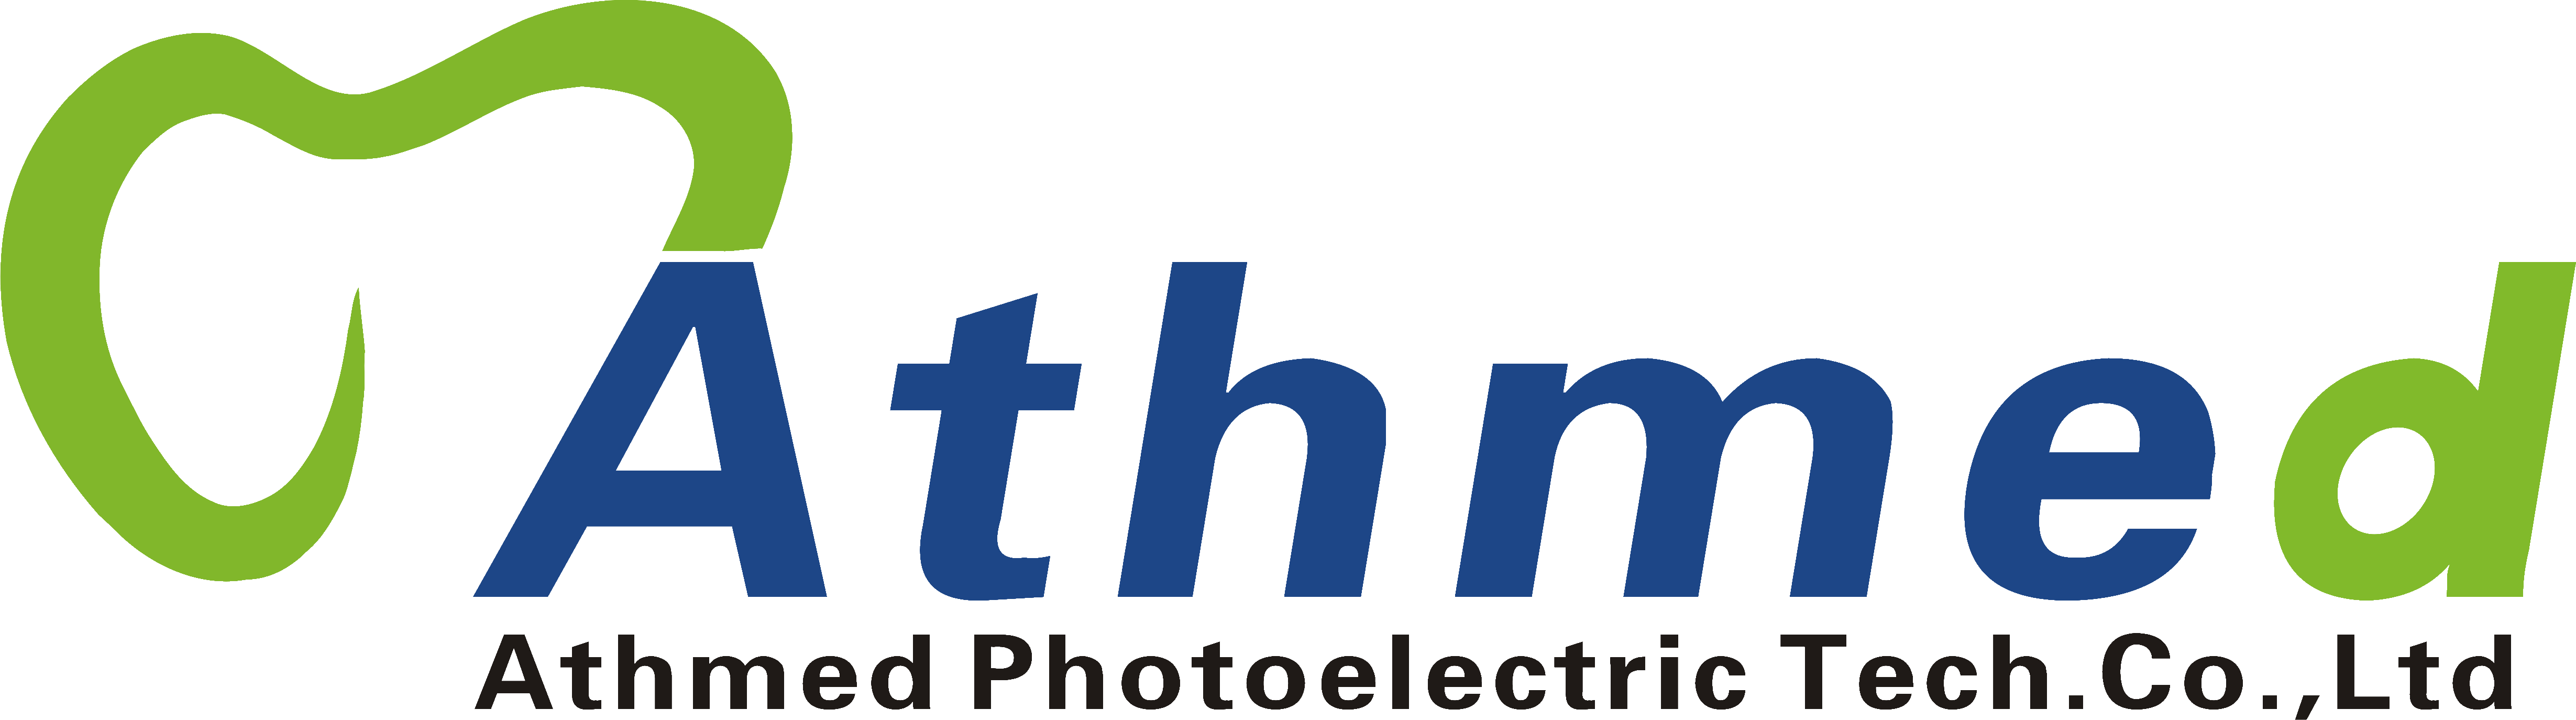 Athmed Photoelectric Technology Co., Ltd.